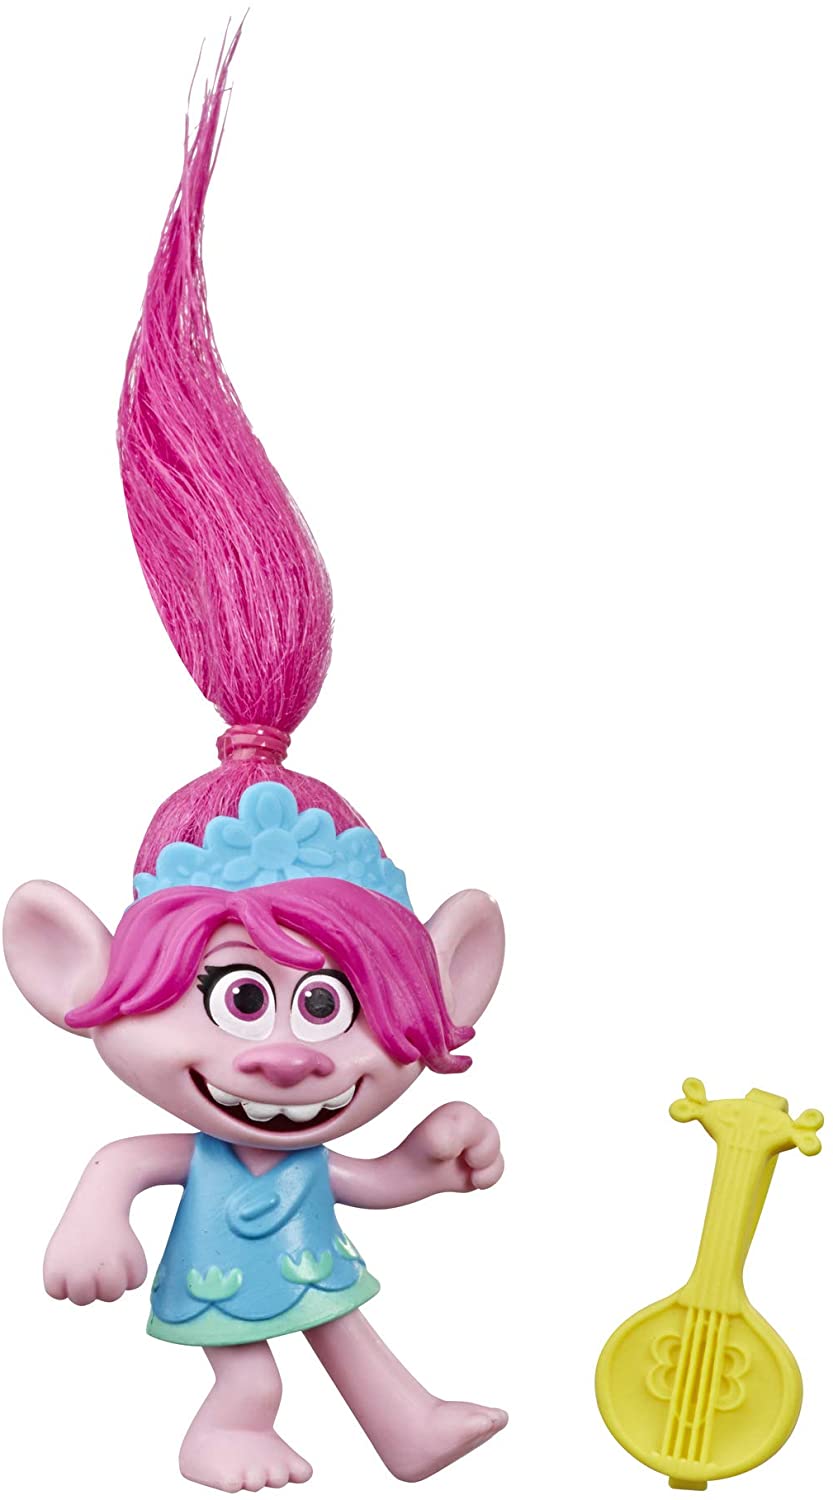 Hasbro 2019 Dreamworks Trolls World Tour Poppy Mini Figure Doll Toy